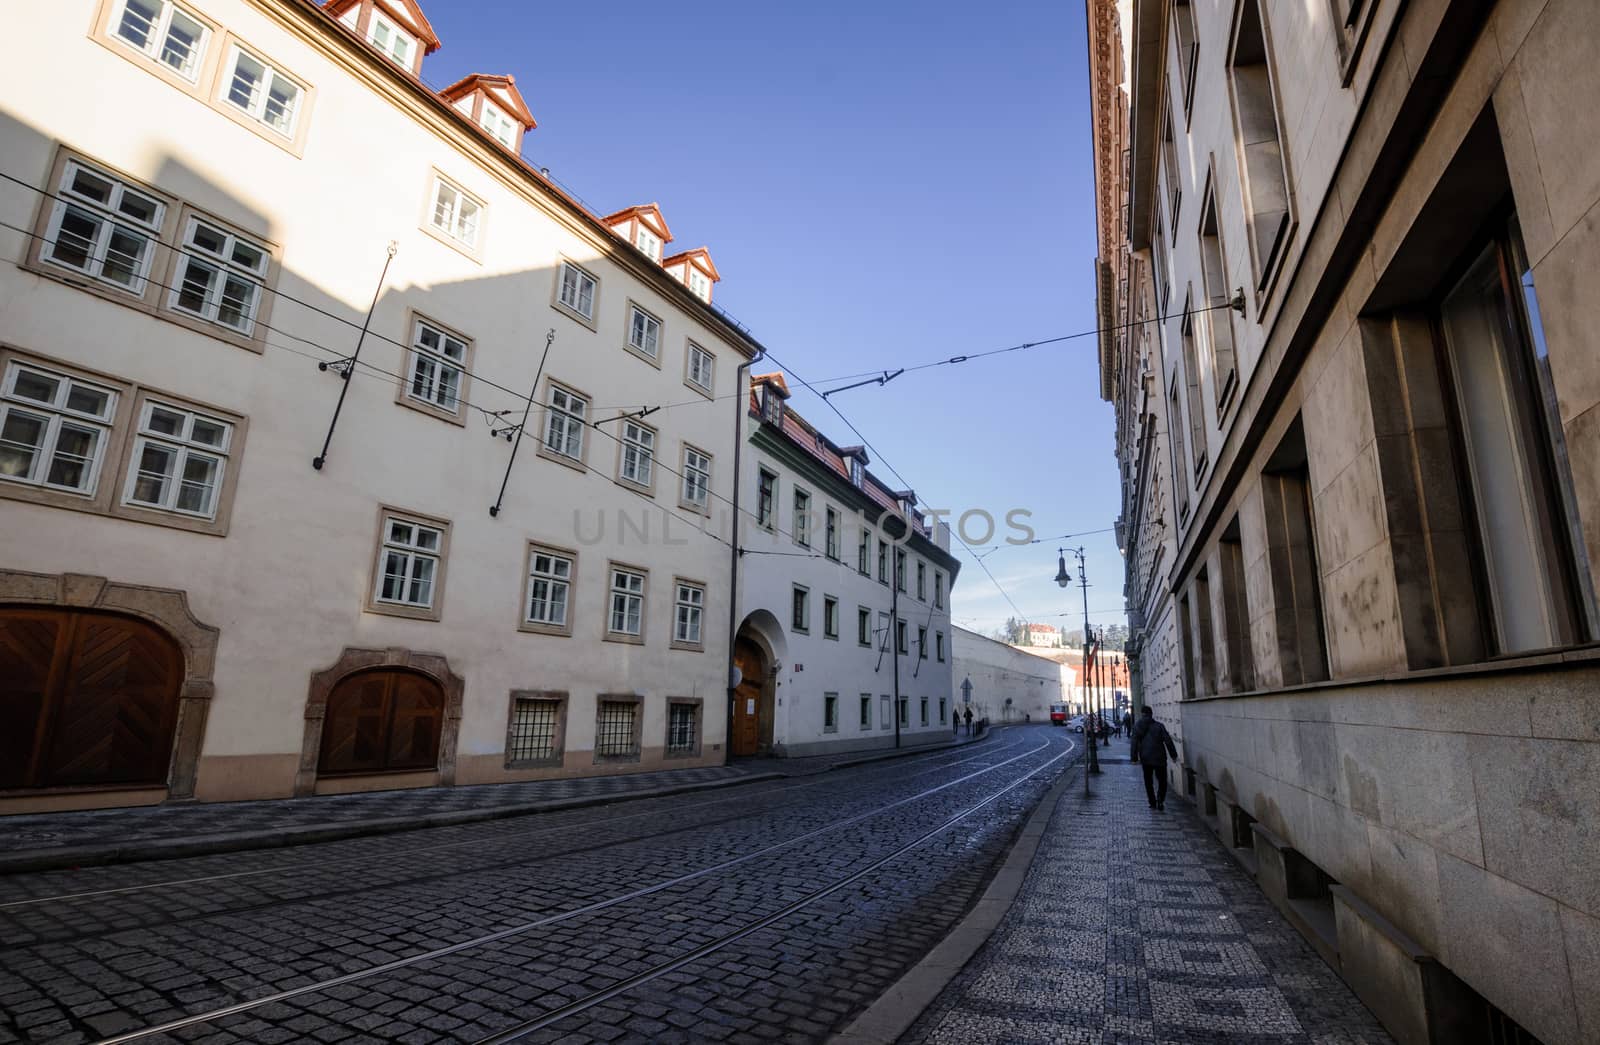 The streets of Prague. Prague, Czech Republic by nikolaydenisov